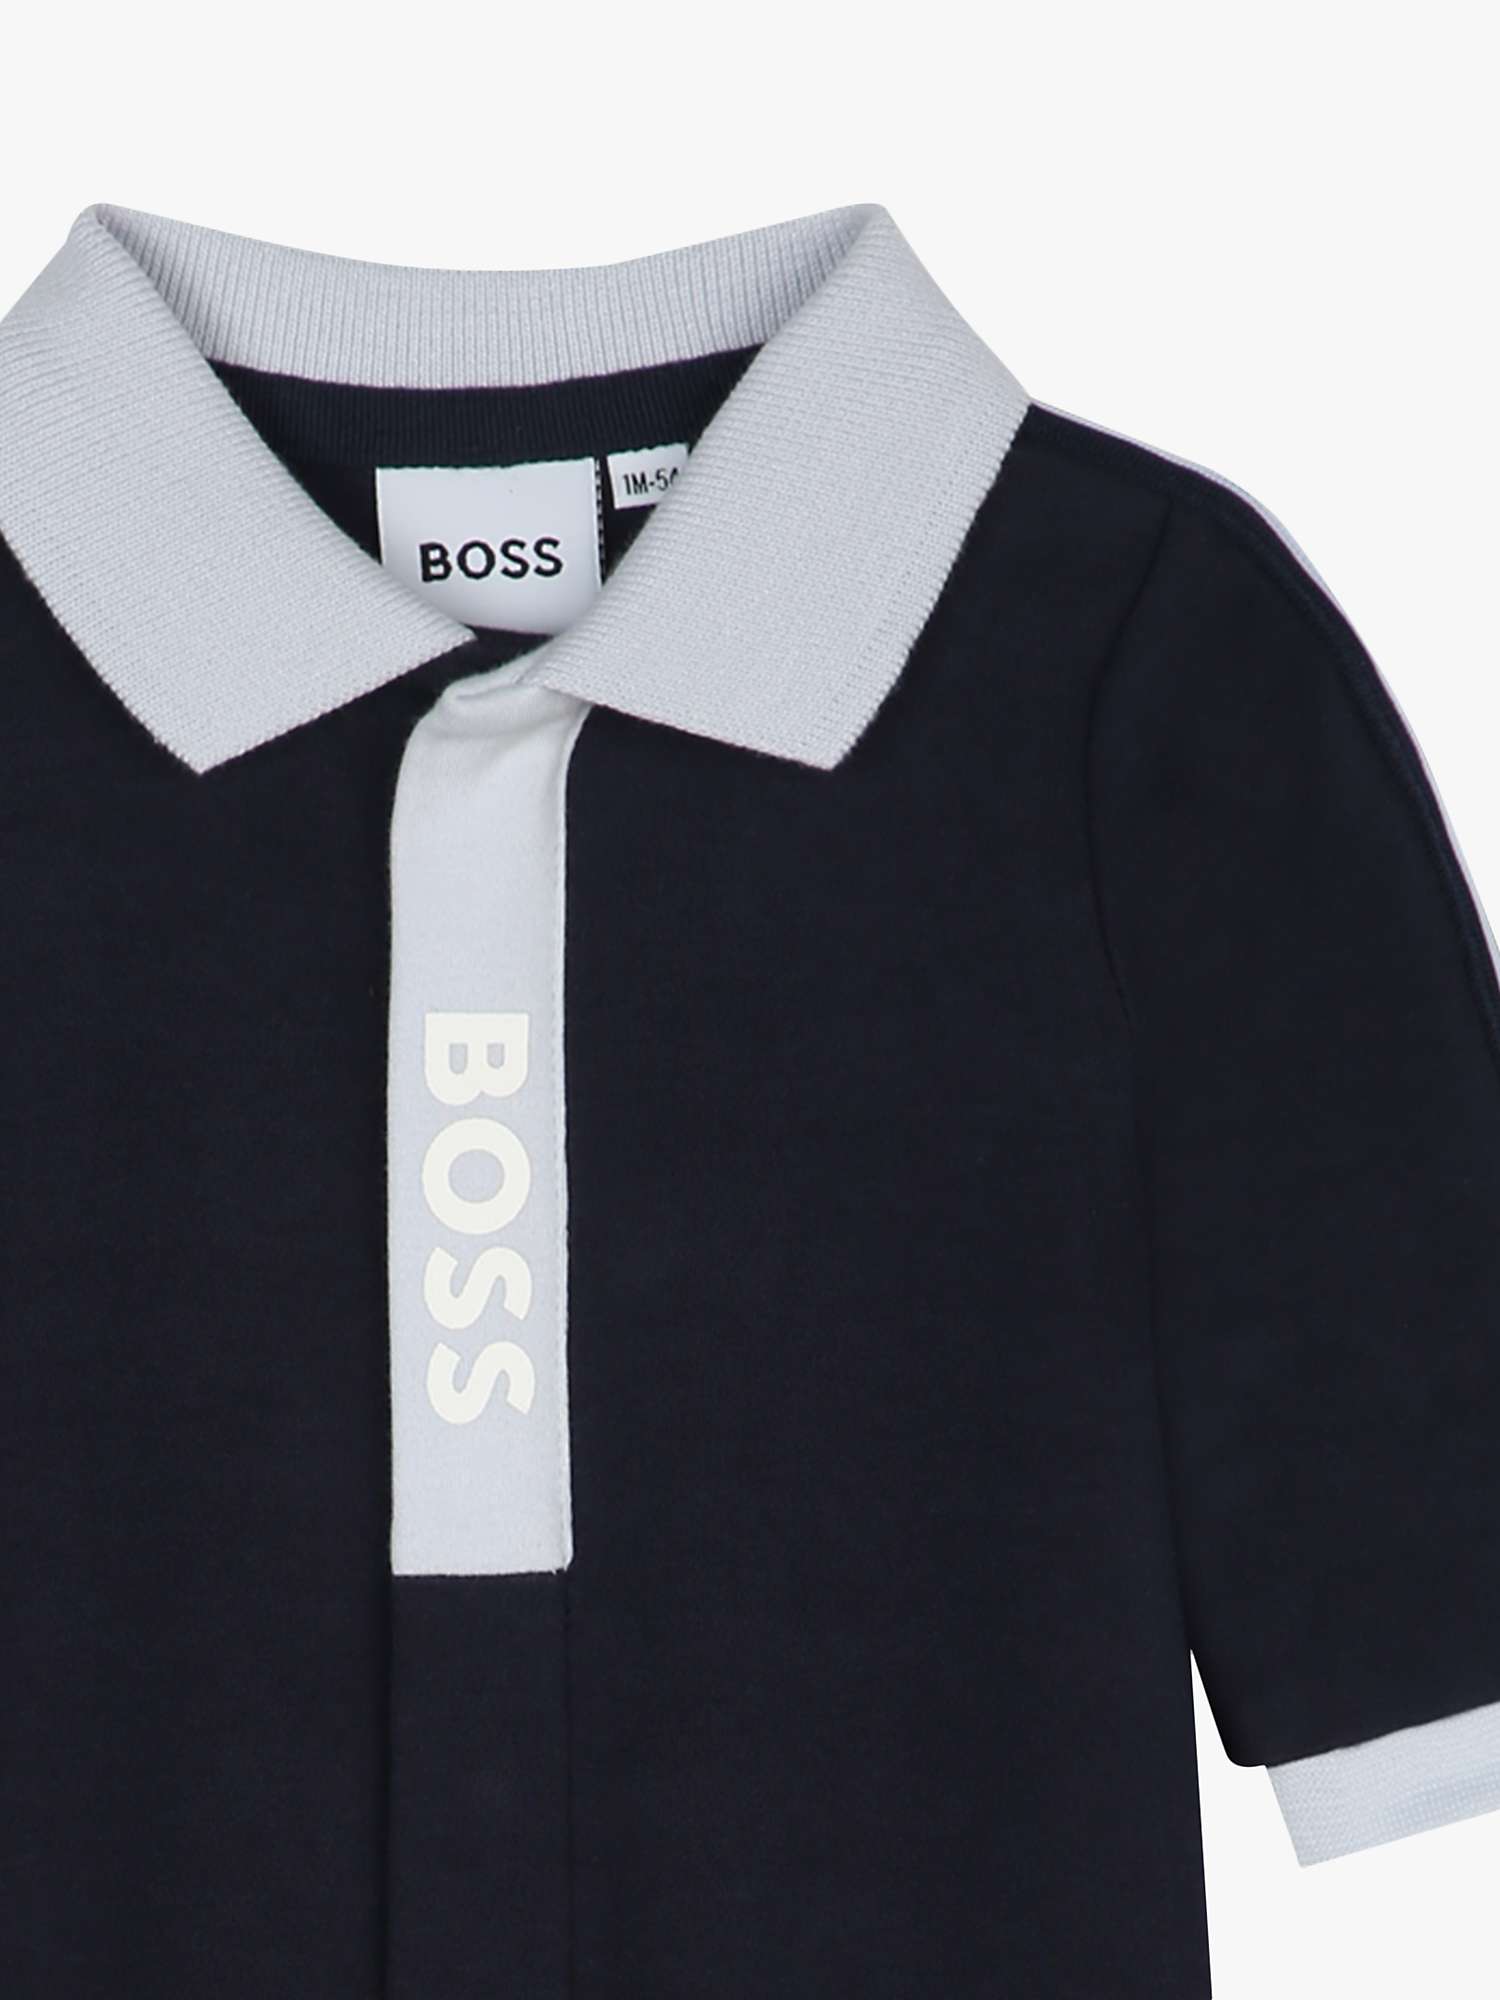 Buy BOSS Baby Collared Pyjamas, Black/White Online at johnlewis.com